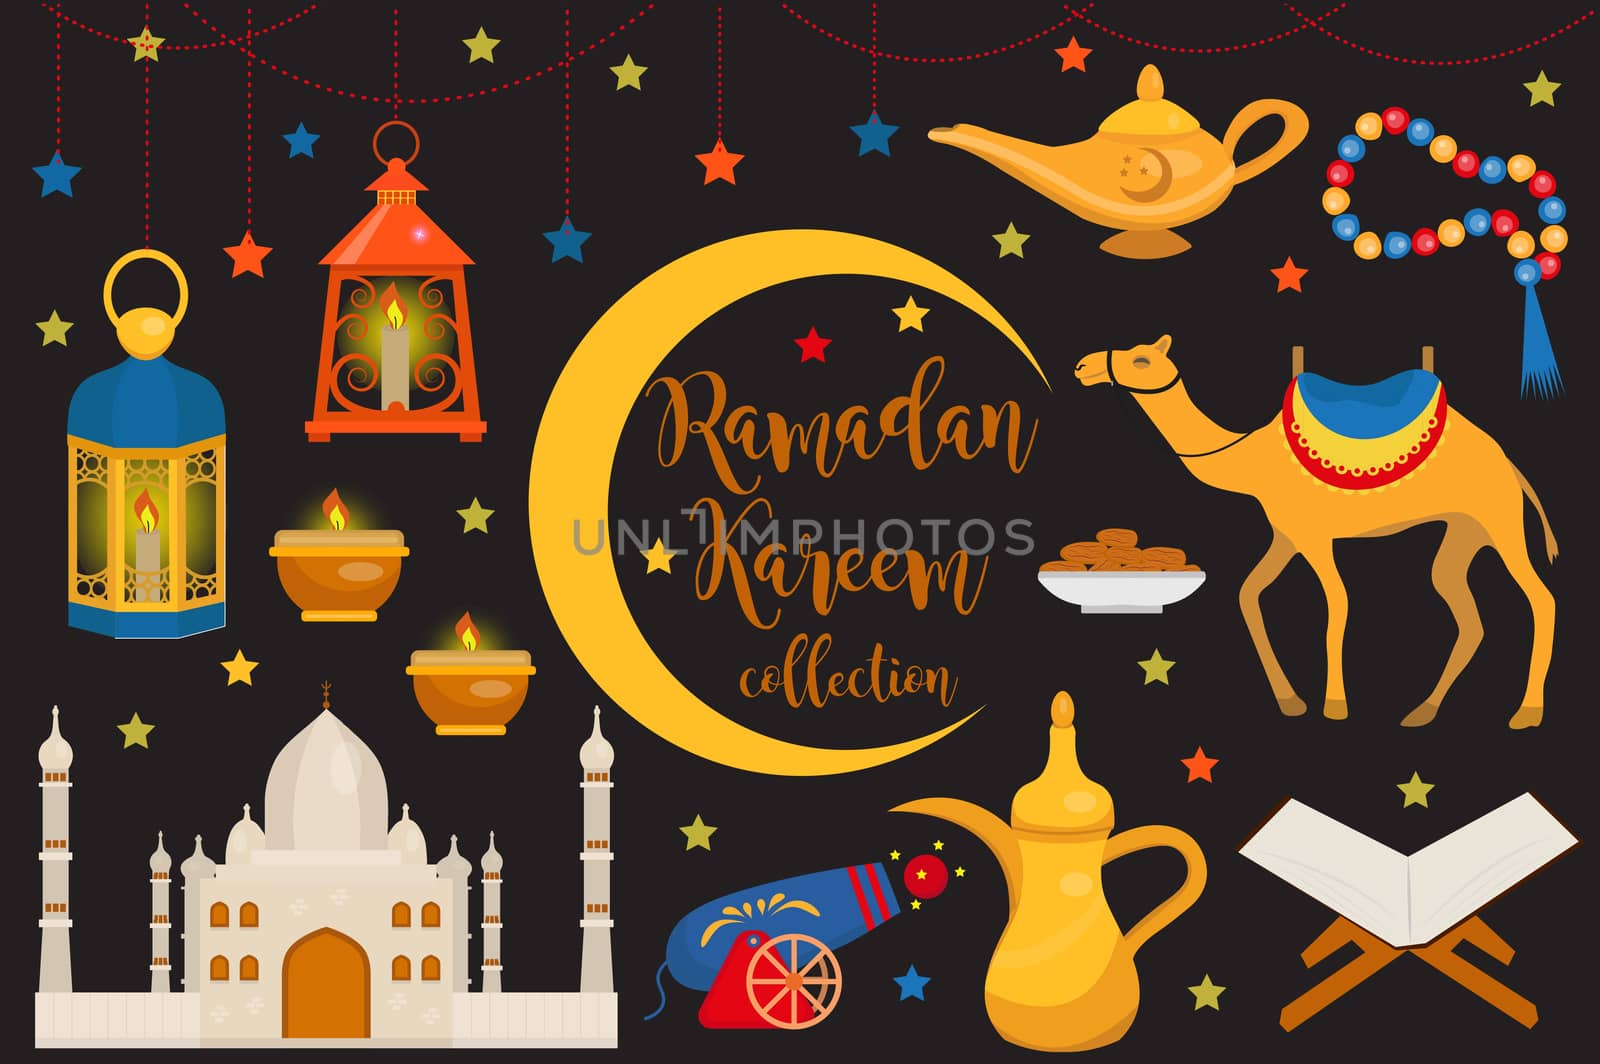 Ramadan kareem flat icon set, cartoon style. Collection of arabic design elements with camel, quran, lanterns, rosary, food, mosque. illustration